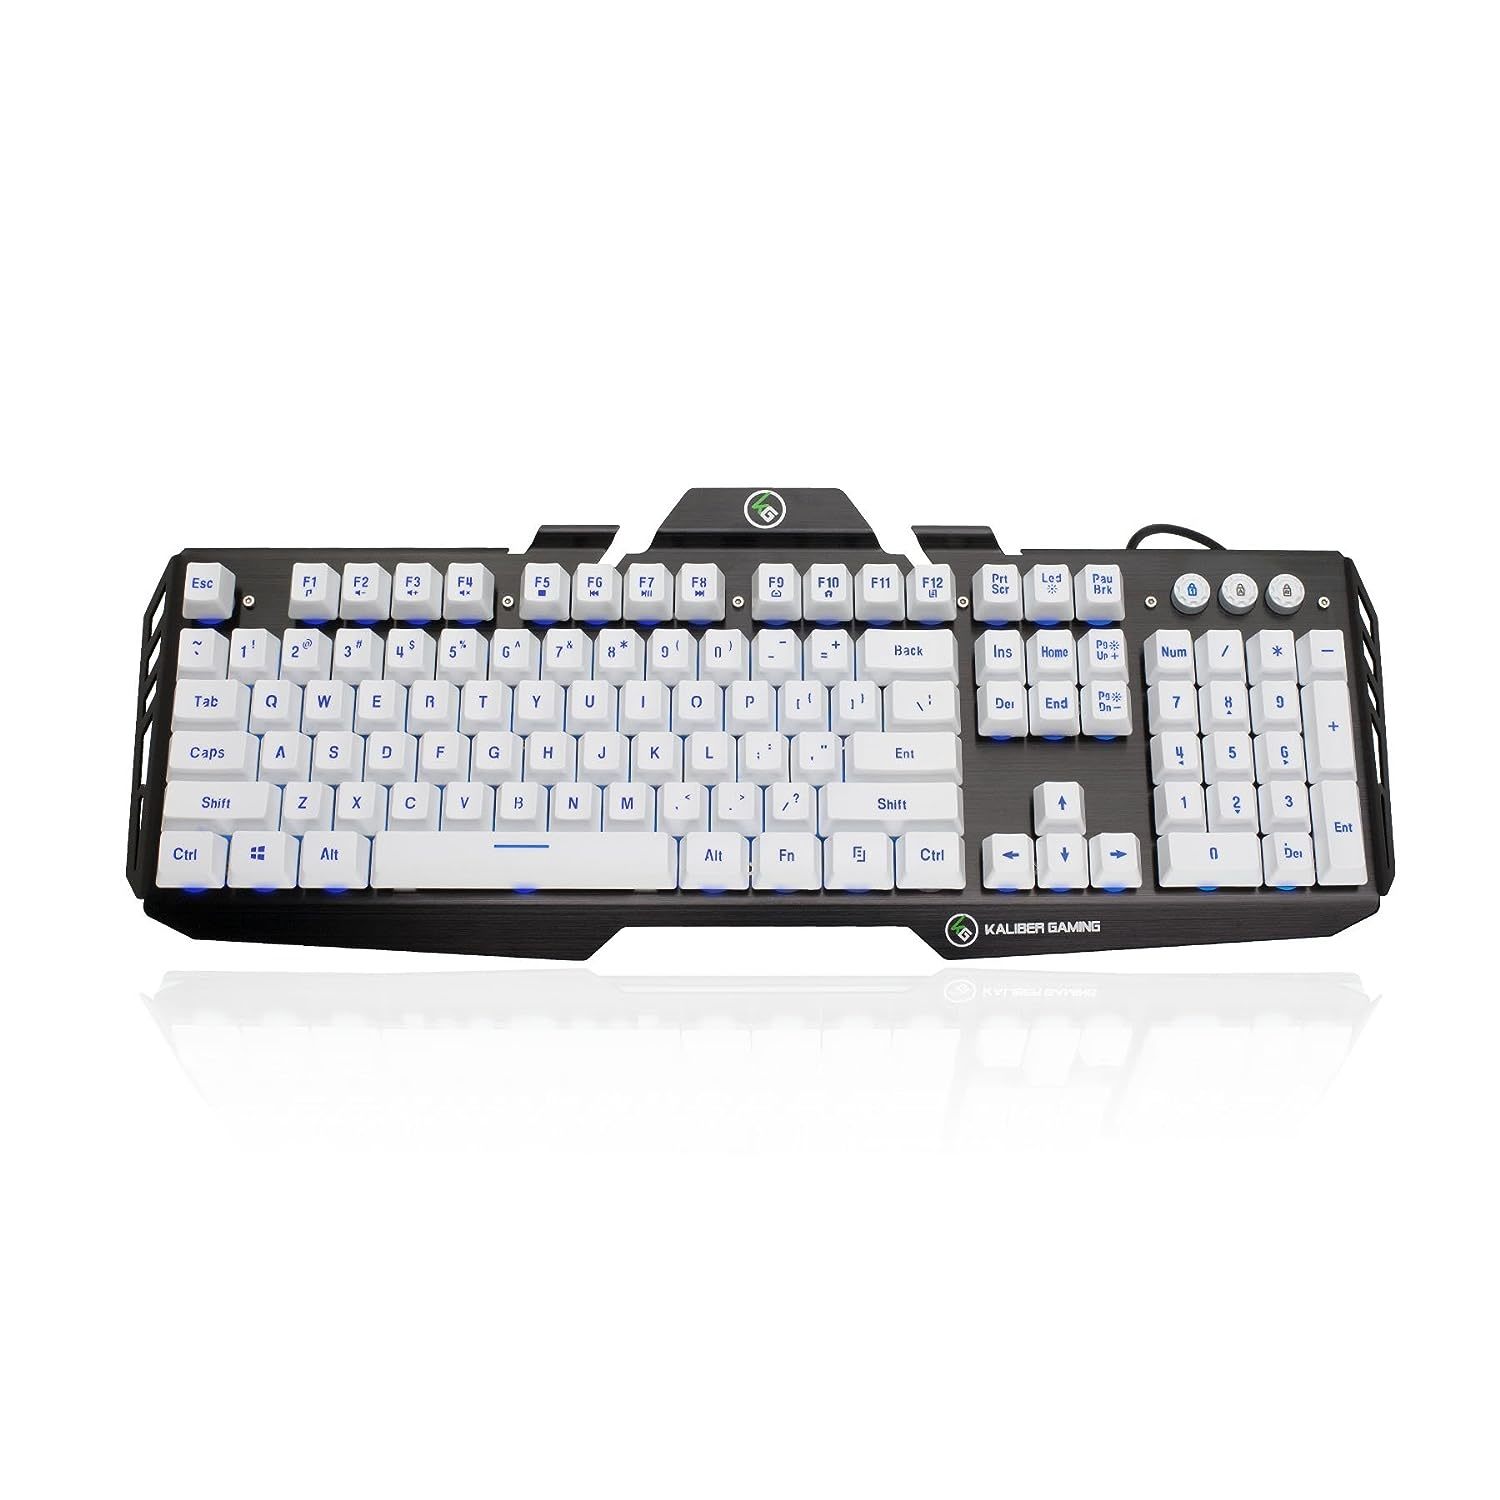 IOGEAR Kaliber Gaming HVER Aluminum Gaming Keyboard, Imperial White, GKB704L-WT - $61.99